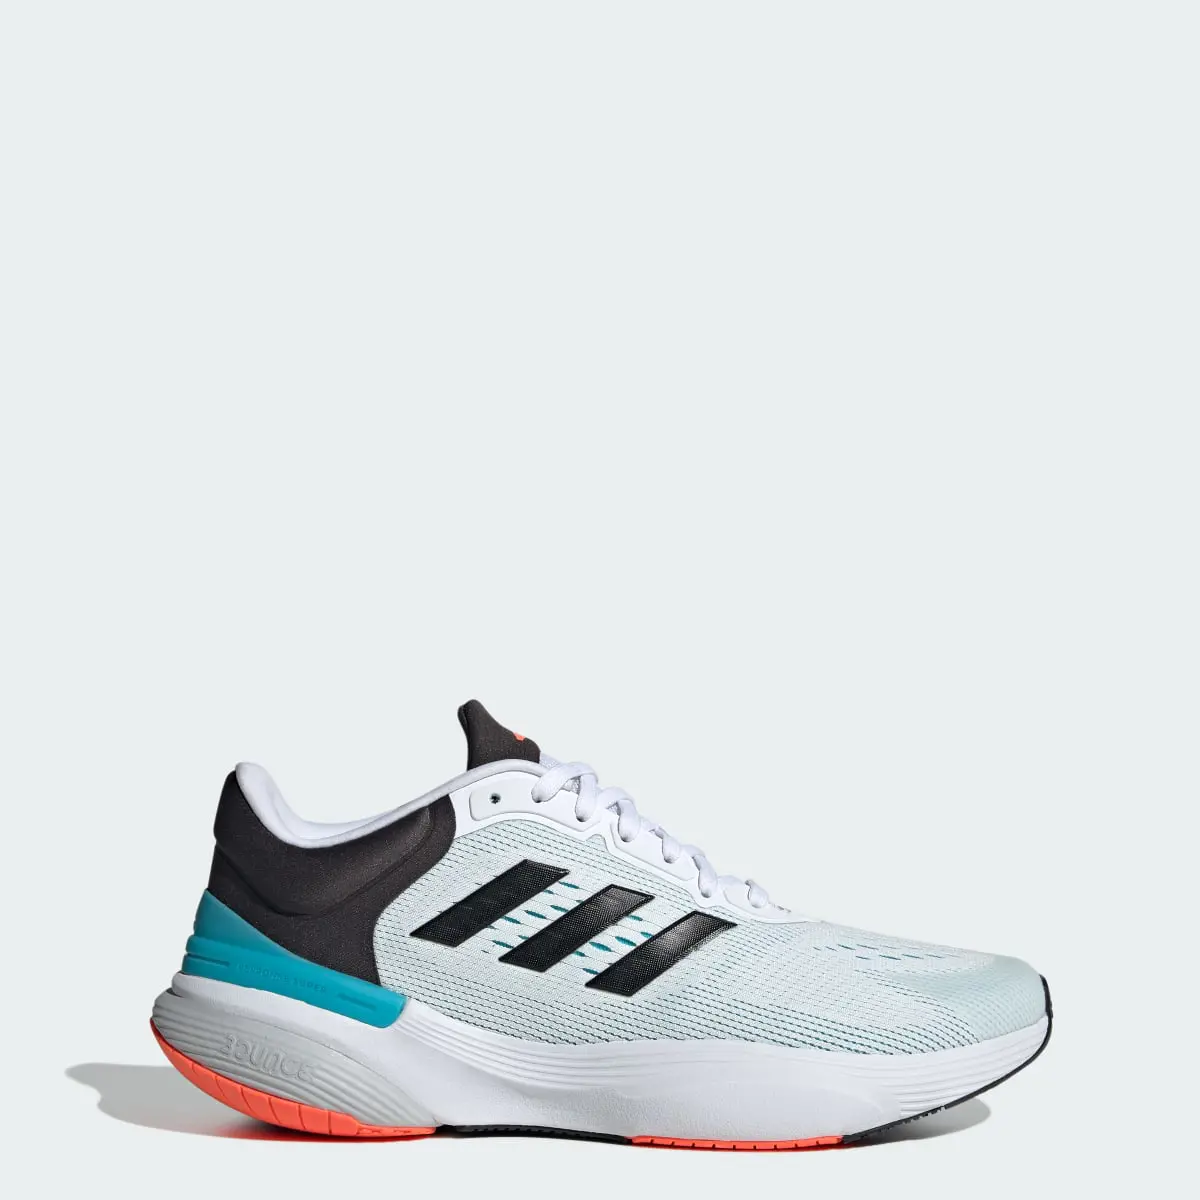 Adidas Response Super 3.0 Shoes. 1